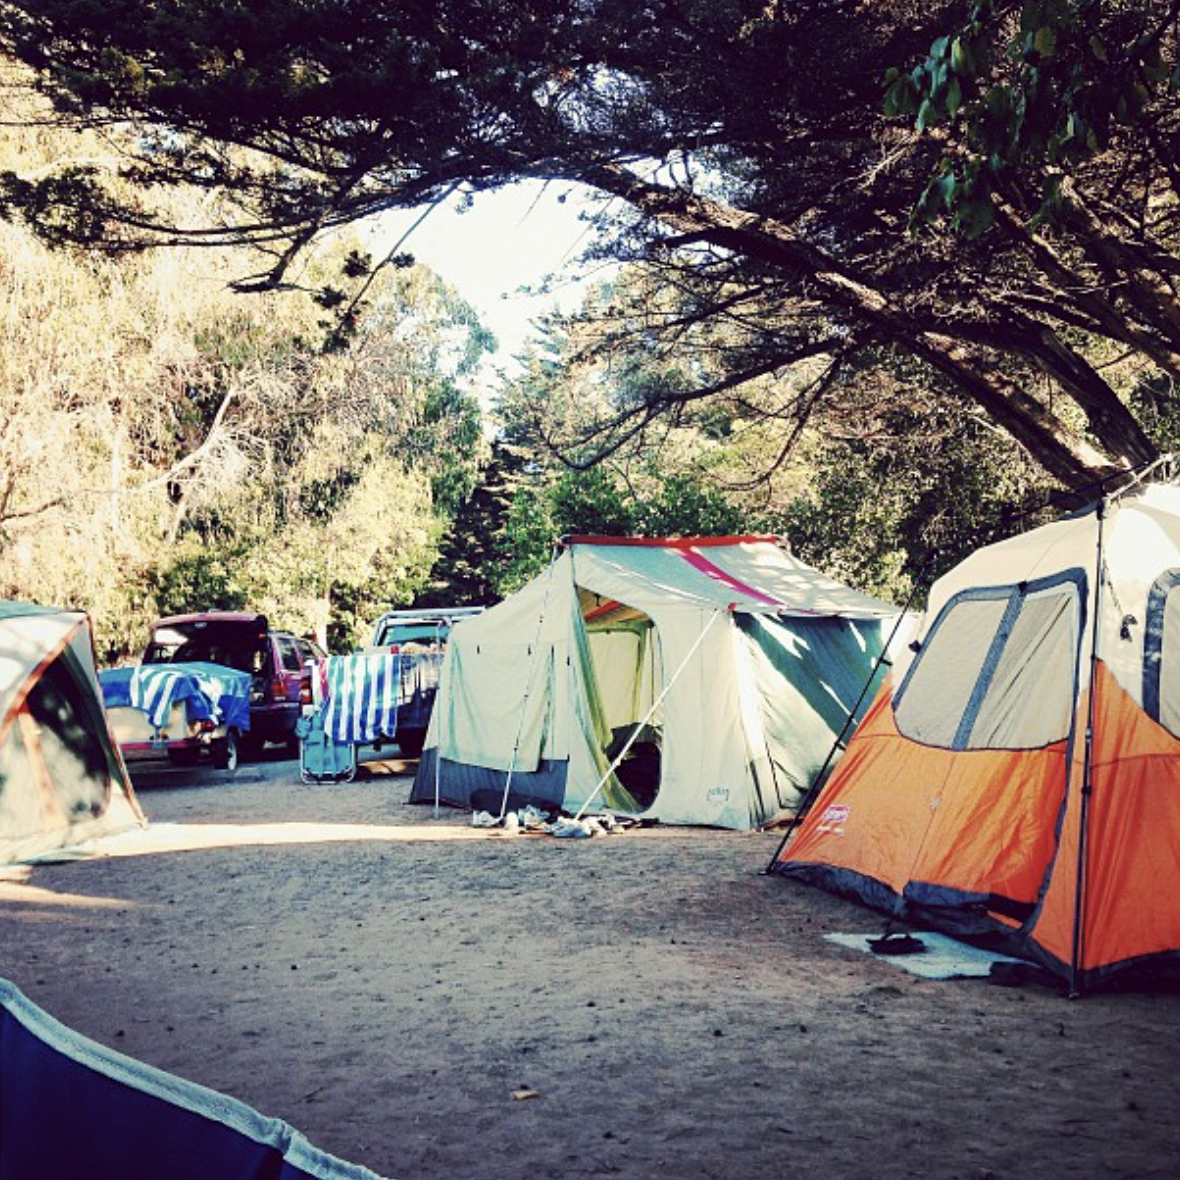 Beach Camping in Southern California! : CampingandHiking